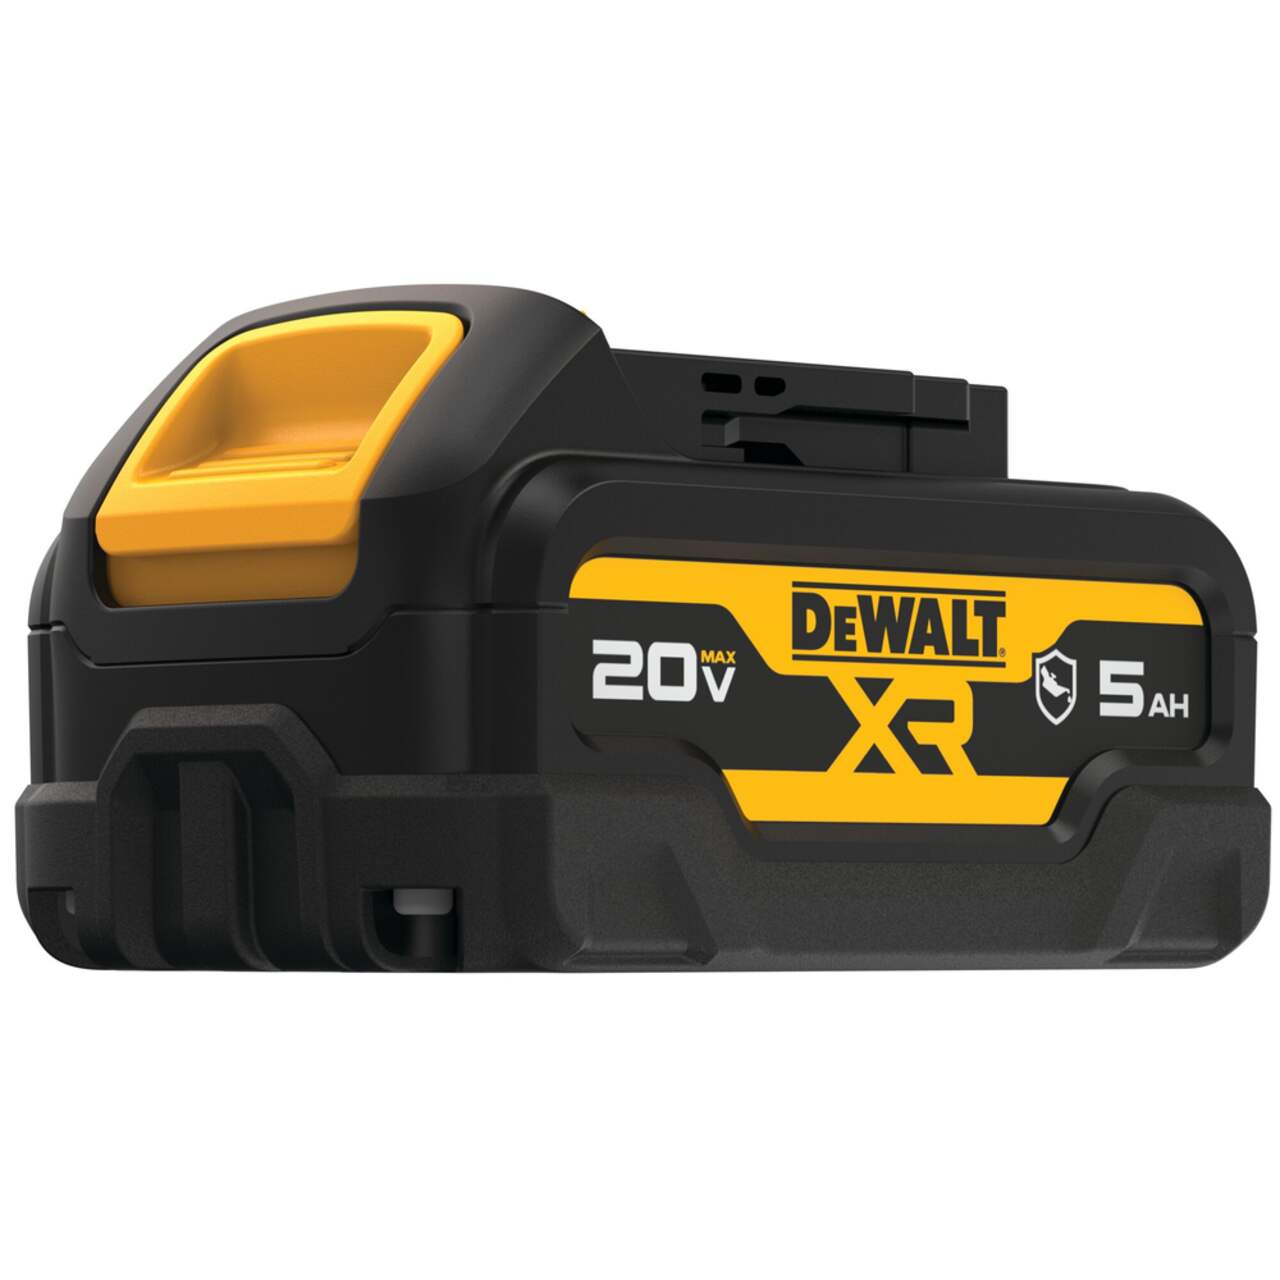 Is it any good? DeWALT 20V 5AH Battery Review 